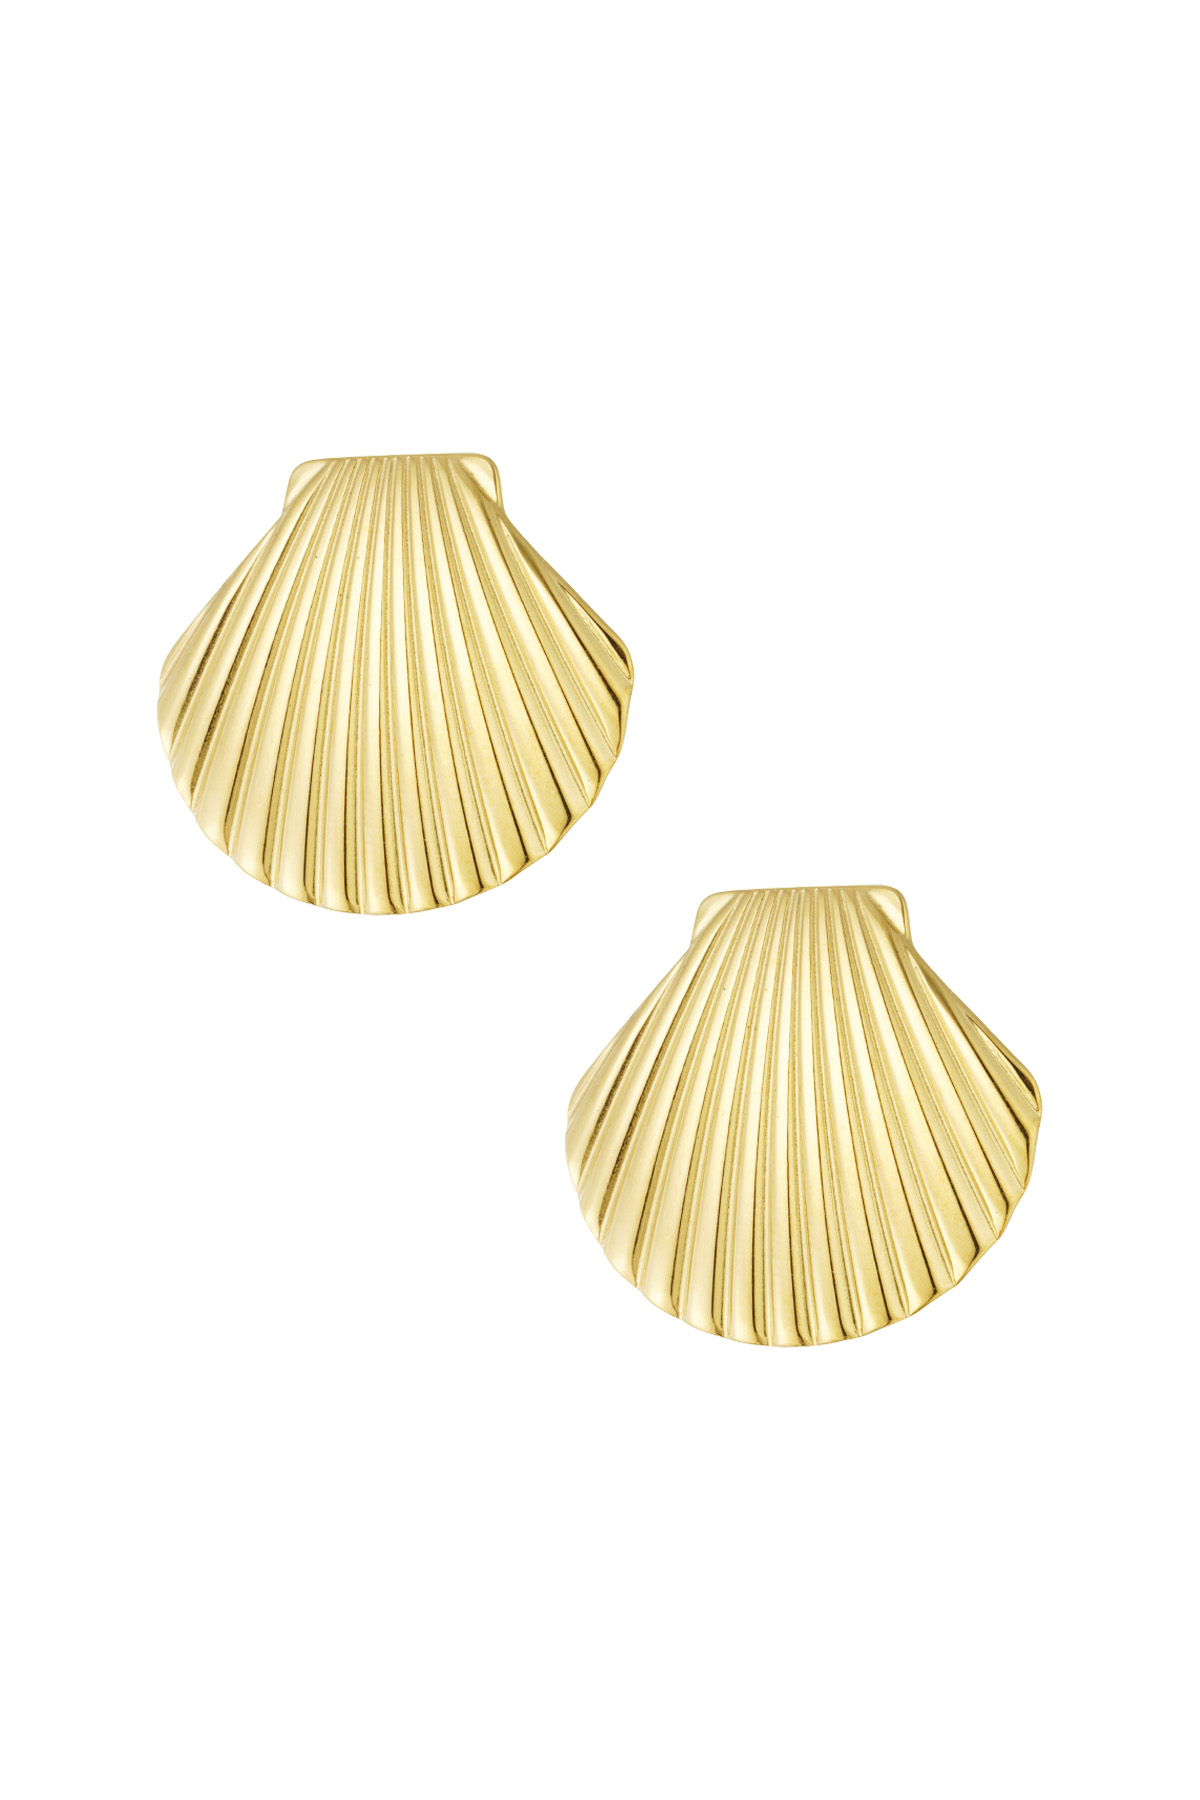 Shell statement earrings - gold